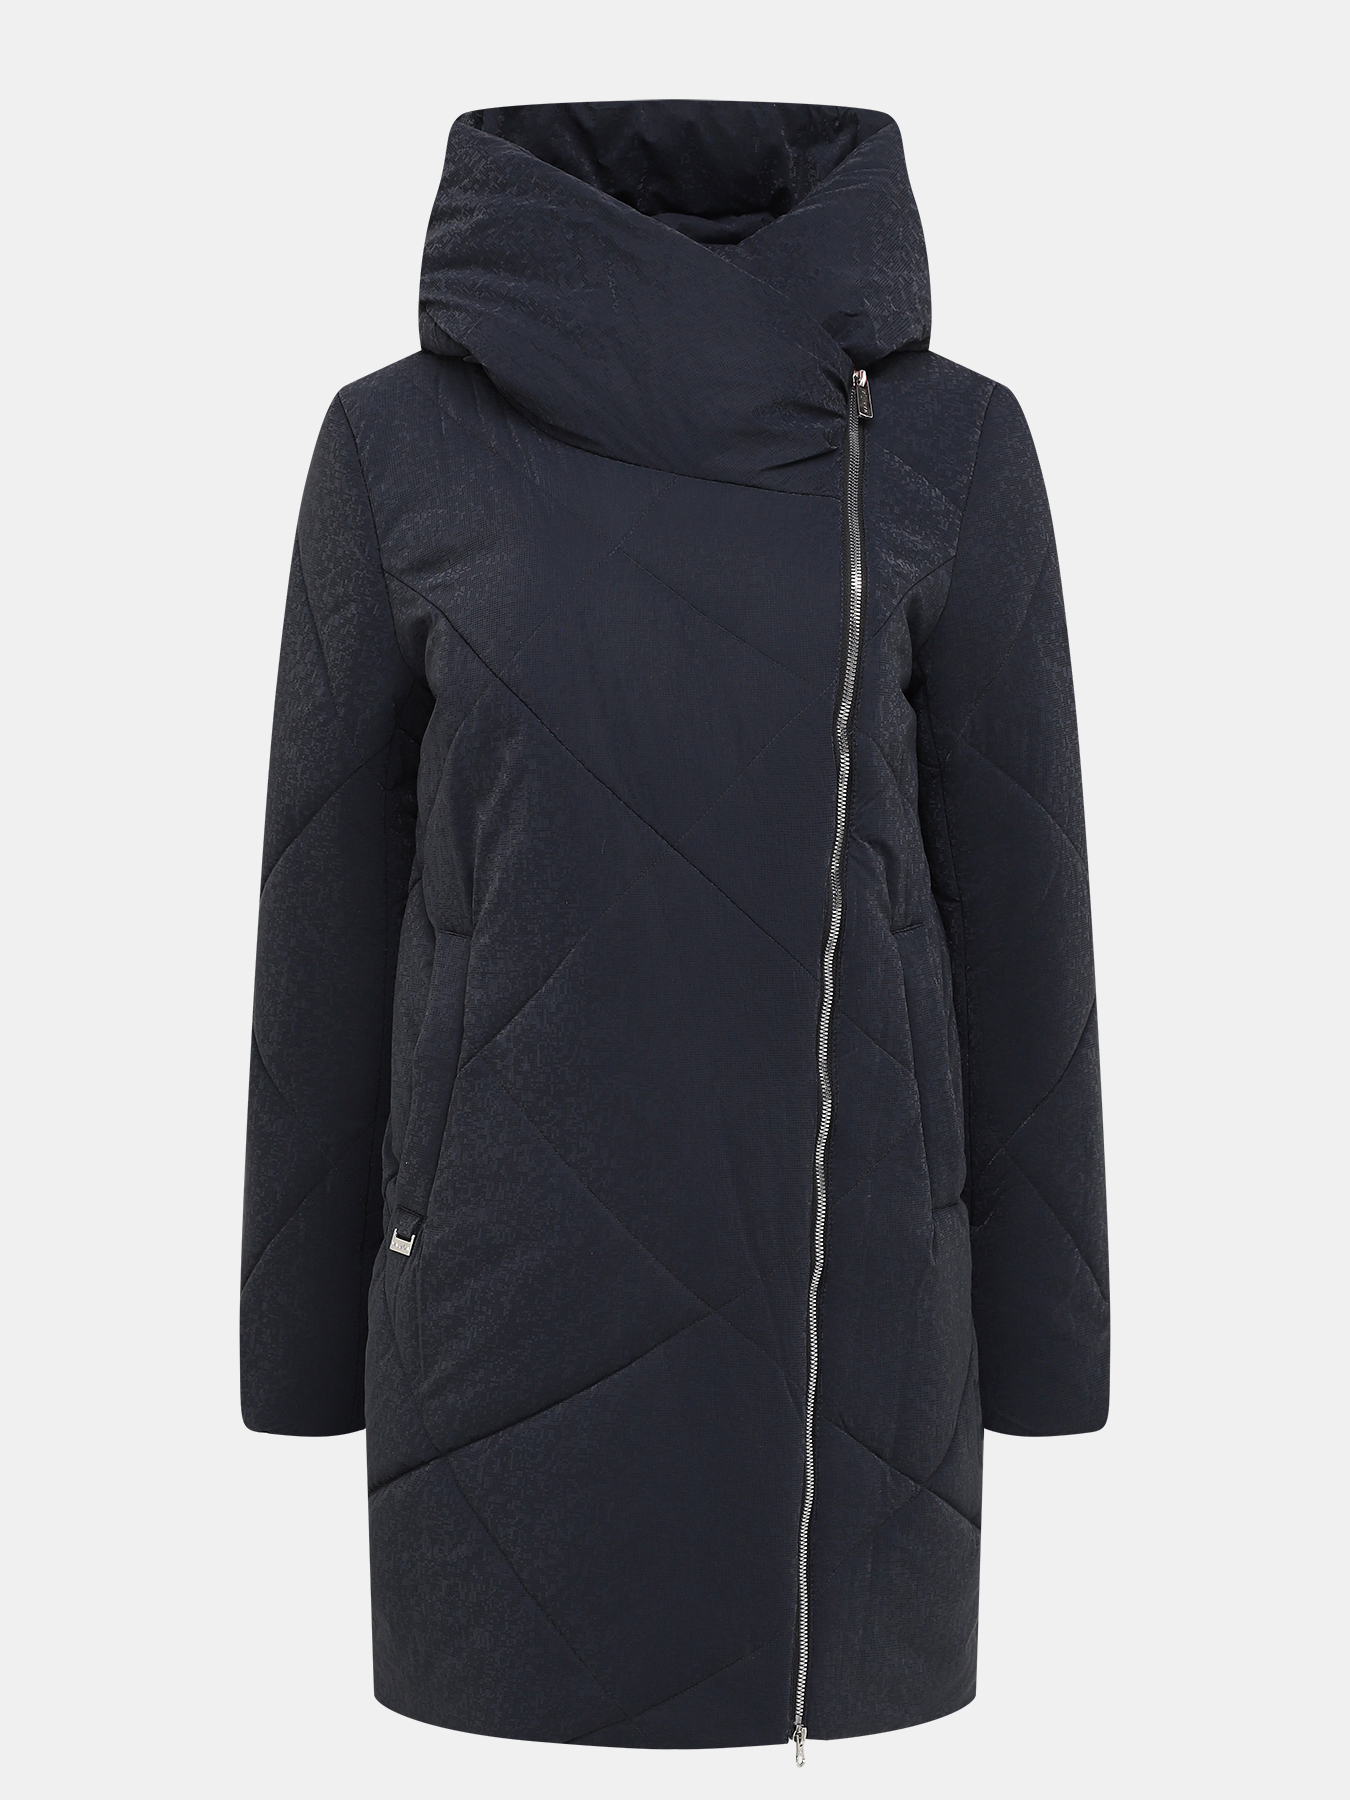 Пальто зимнее Maritta 433549-020, цвет темно-синий, размер 44